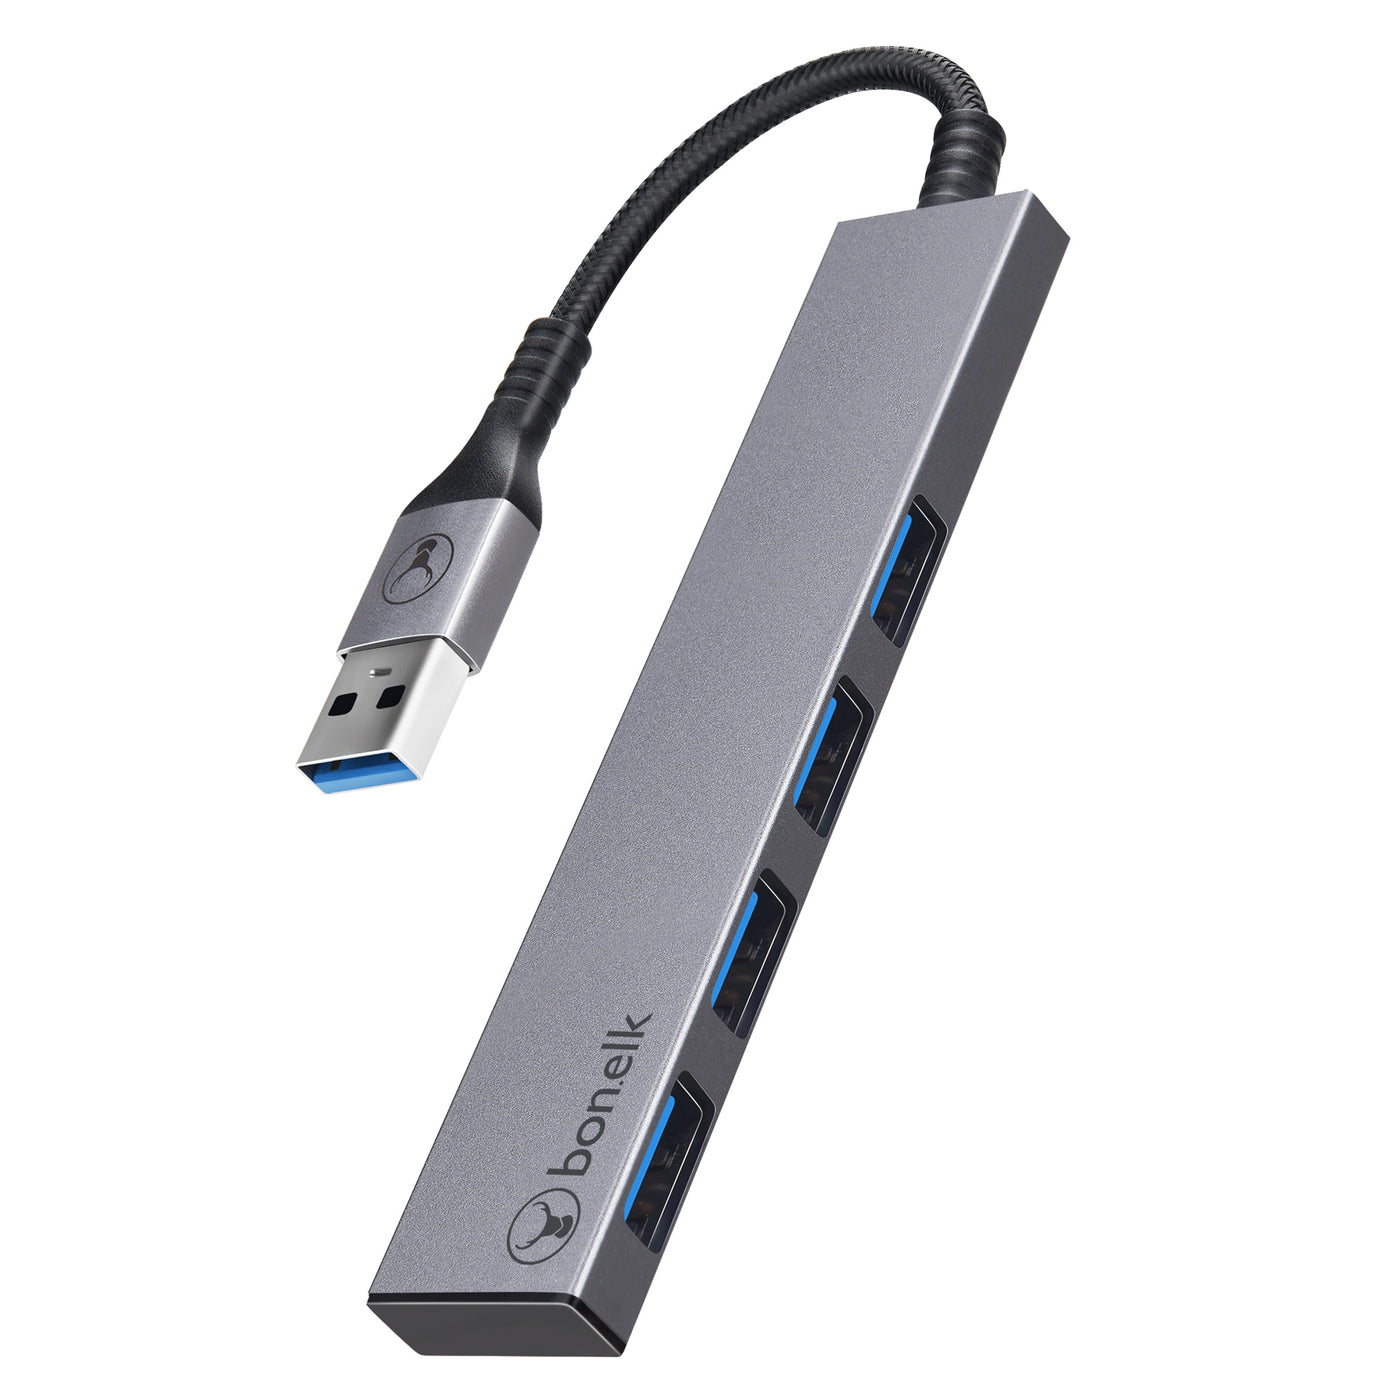 Bonelk Long-Life USB-A to 4 Port USB 3.0 Slim Hub - Space Grey